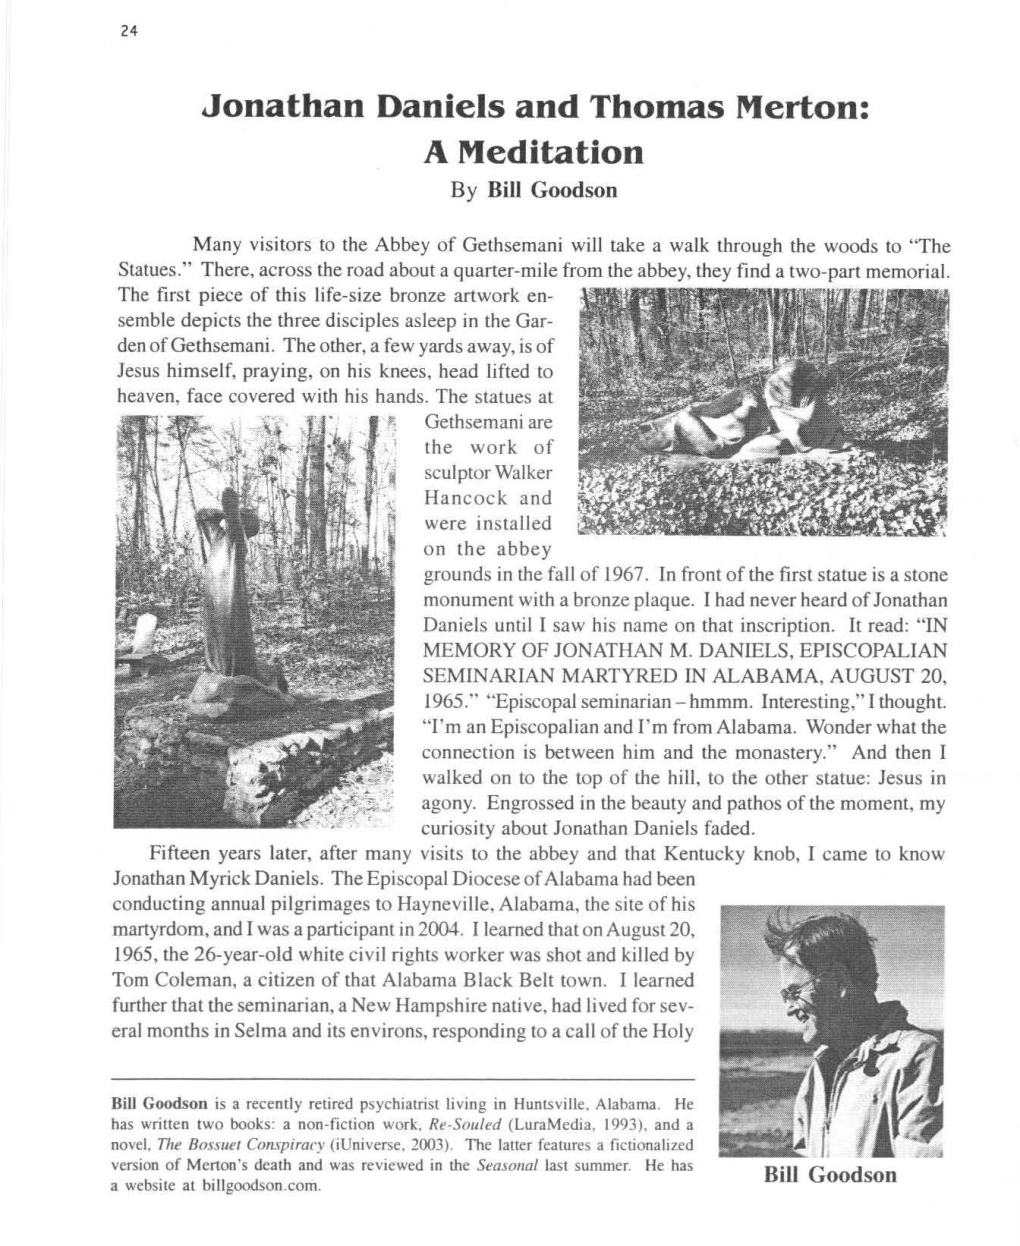 Jonathan Daniels and Thomas Merton: a Meditation by Bill Goodson